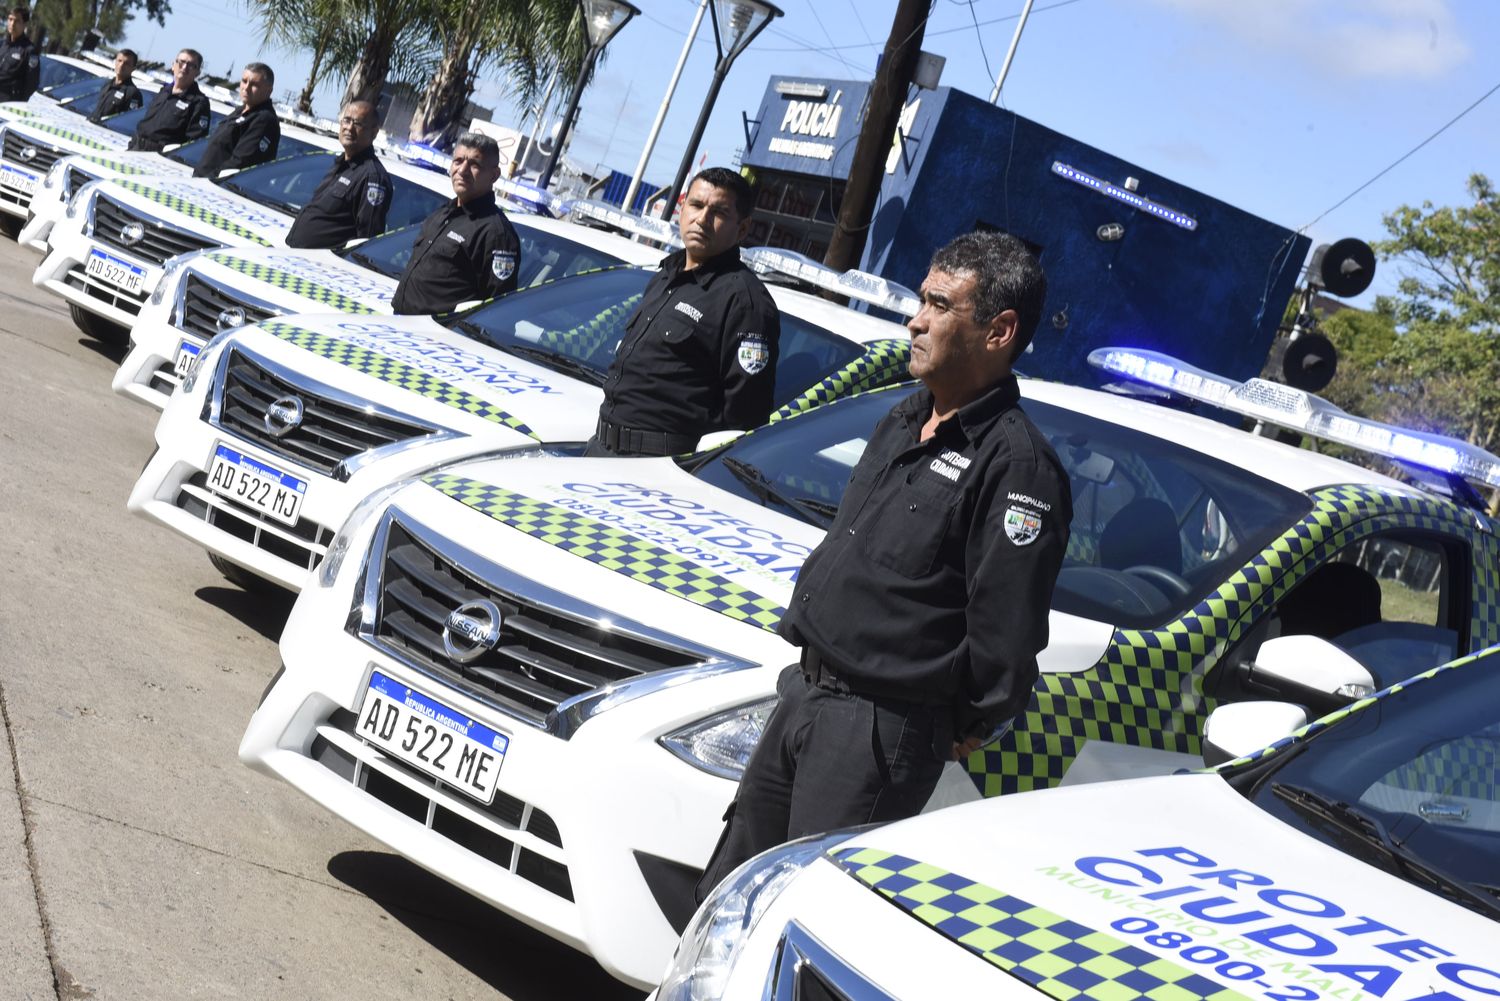 Malvinas Argentinas sumó diez nuevos patrulleros a su flota municipal